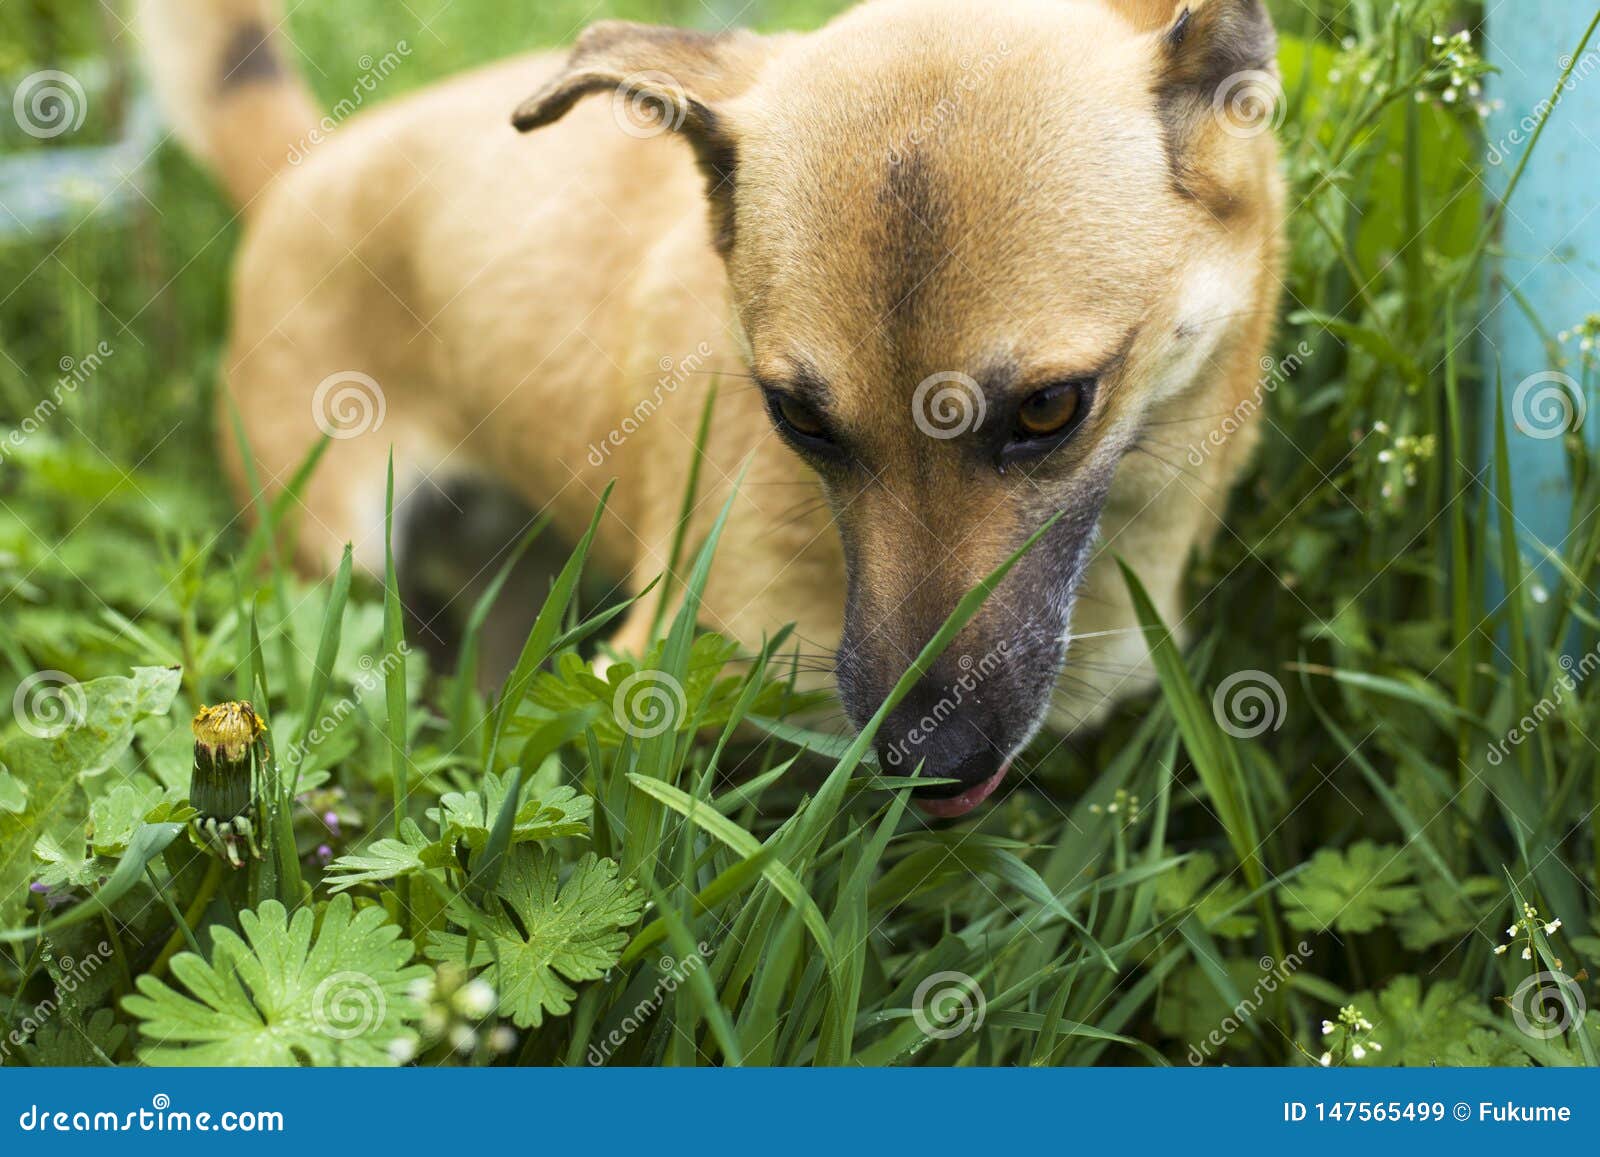 Едят ли собаки траву. Собачка маленькая на газоне. Собака на лужайке. Овчарка ест траву.